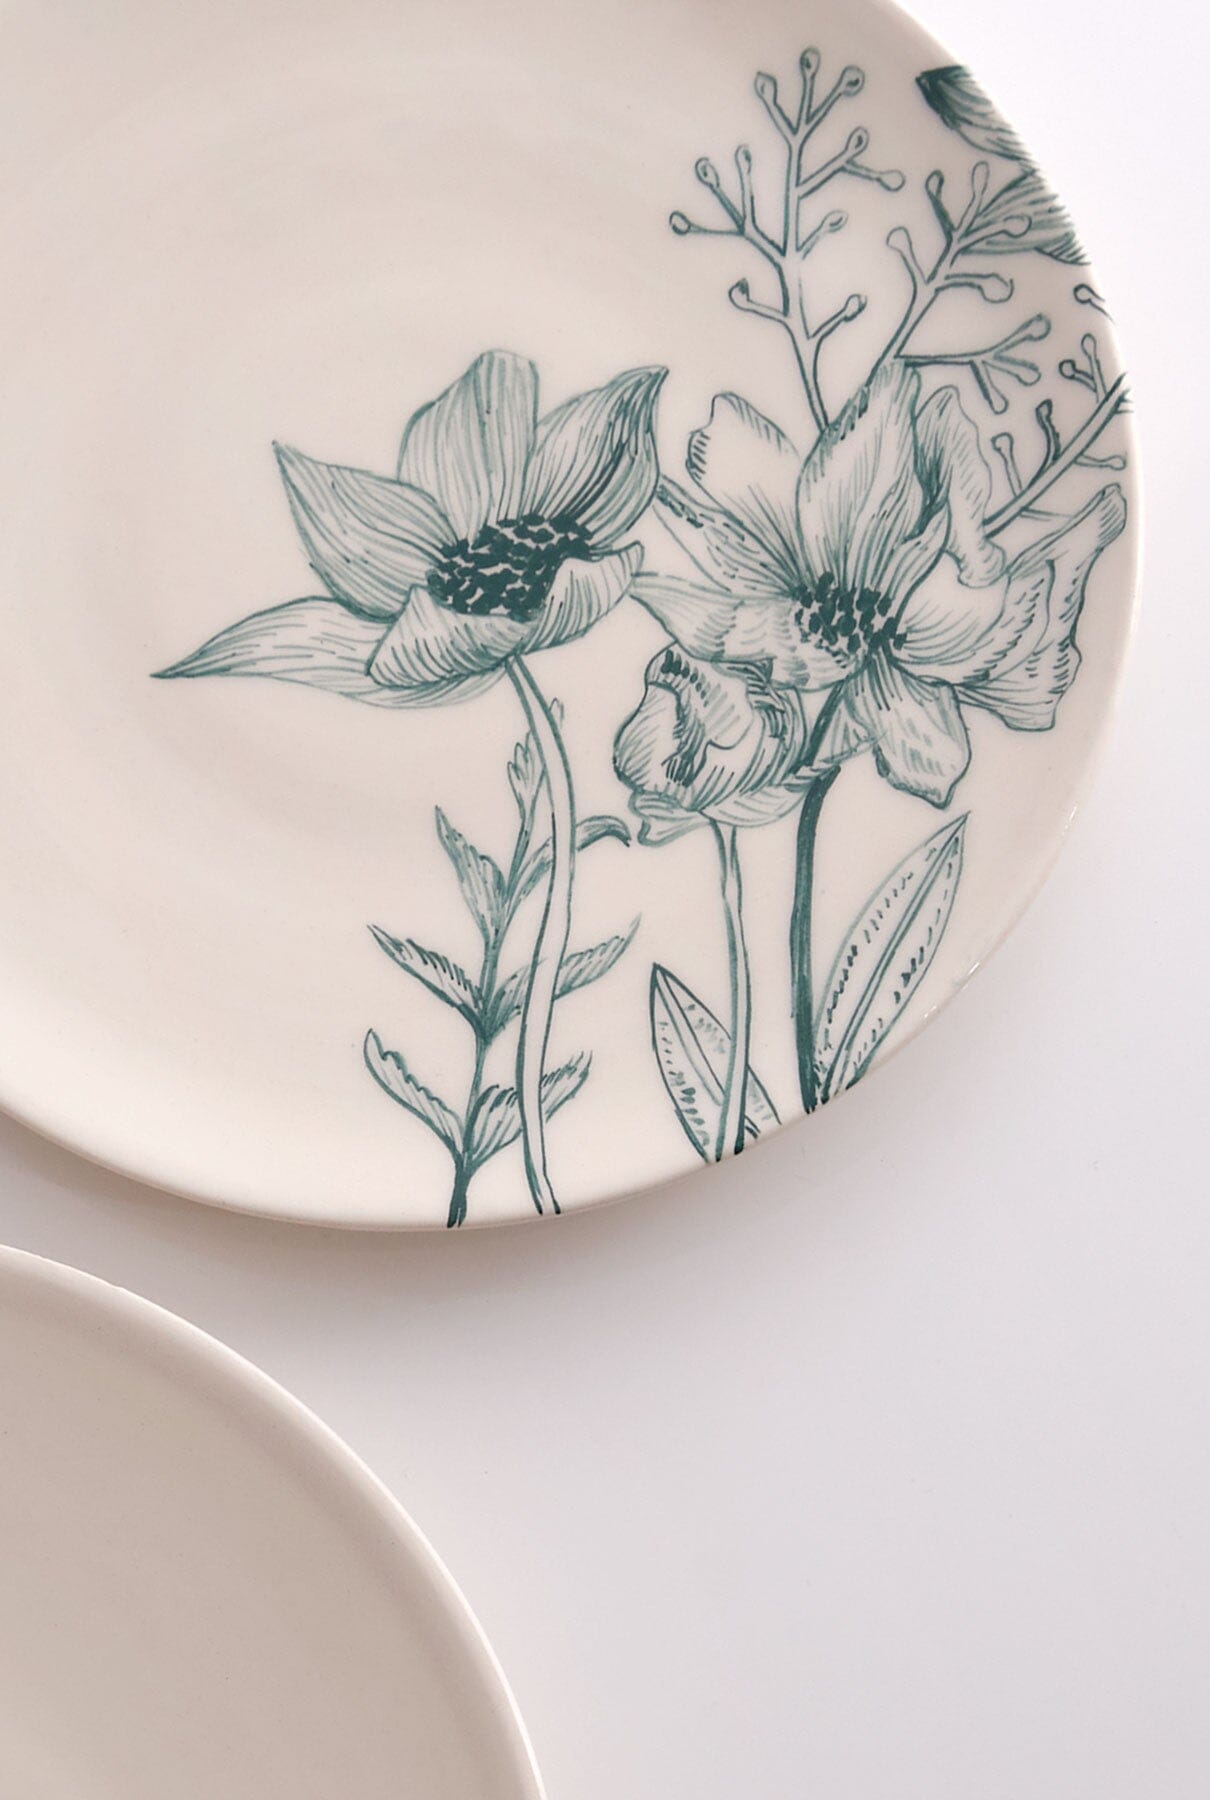 Botanical design 2 dinner plates set Tableware Nuria Blanco Vajillas 